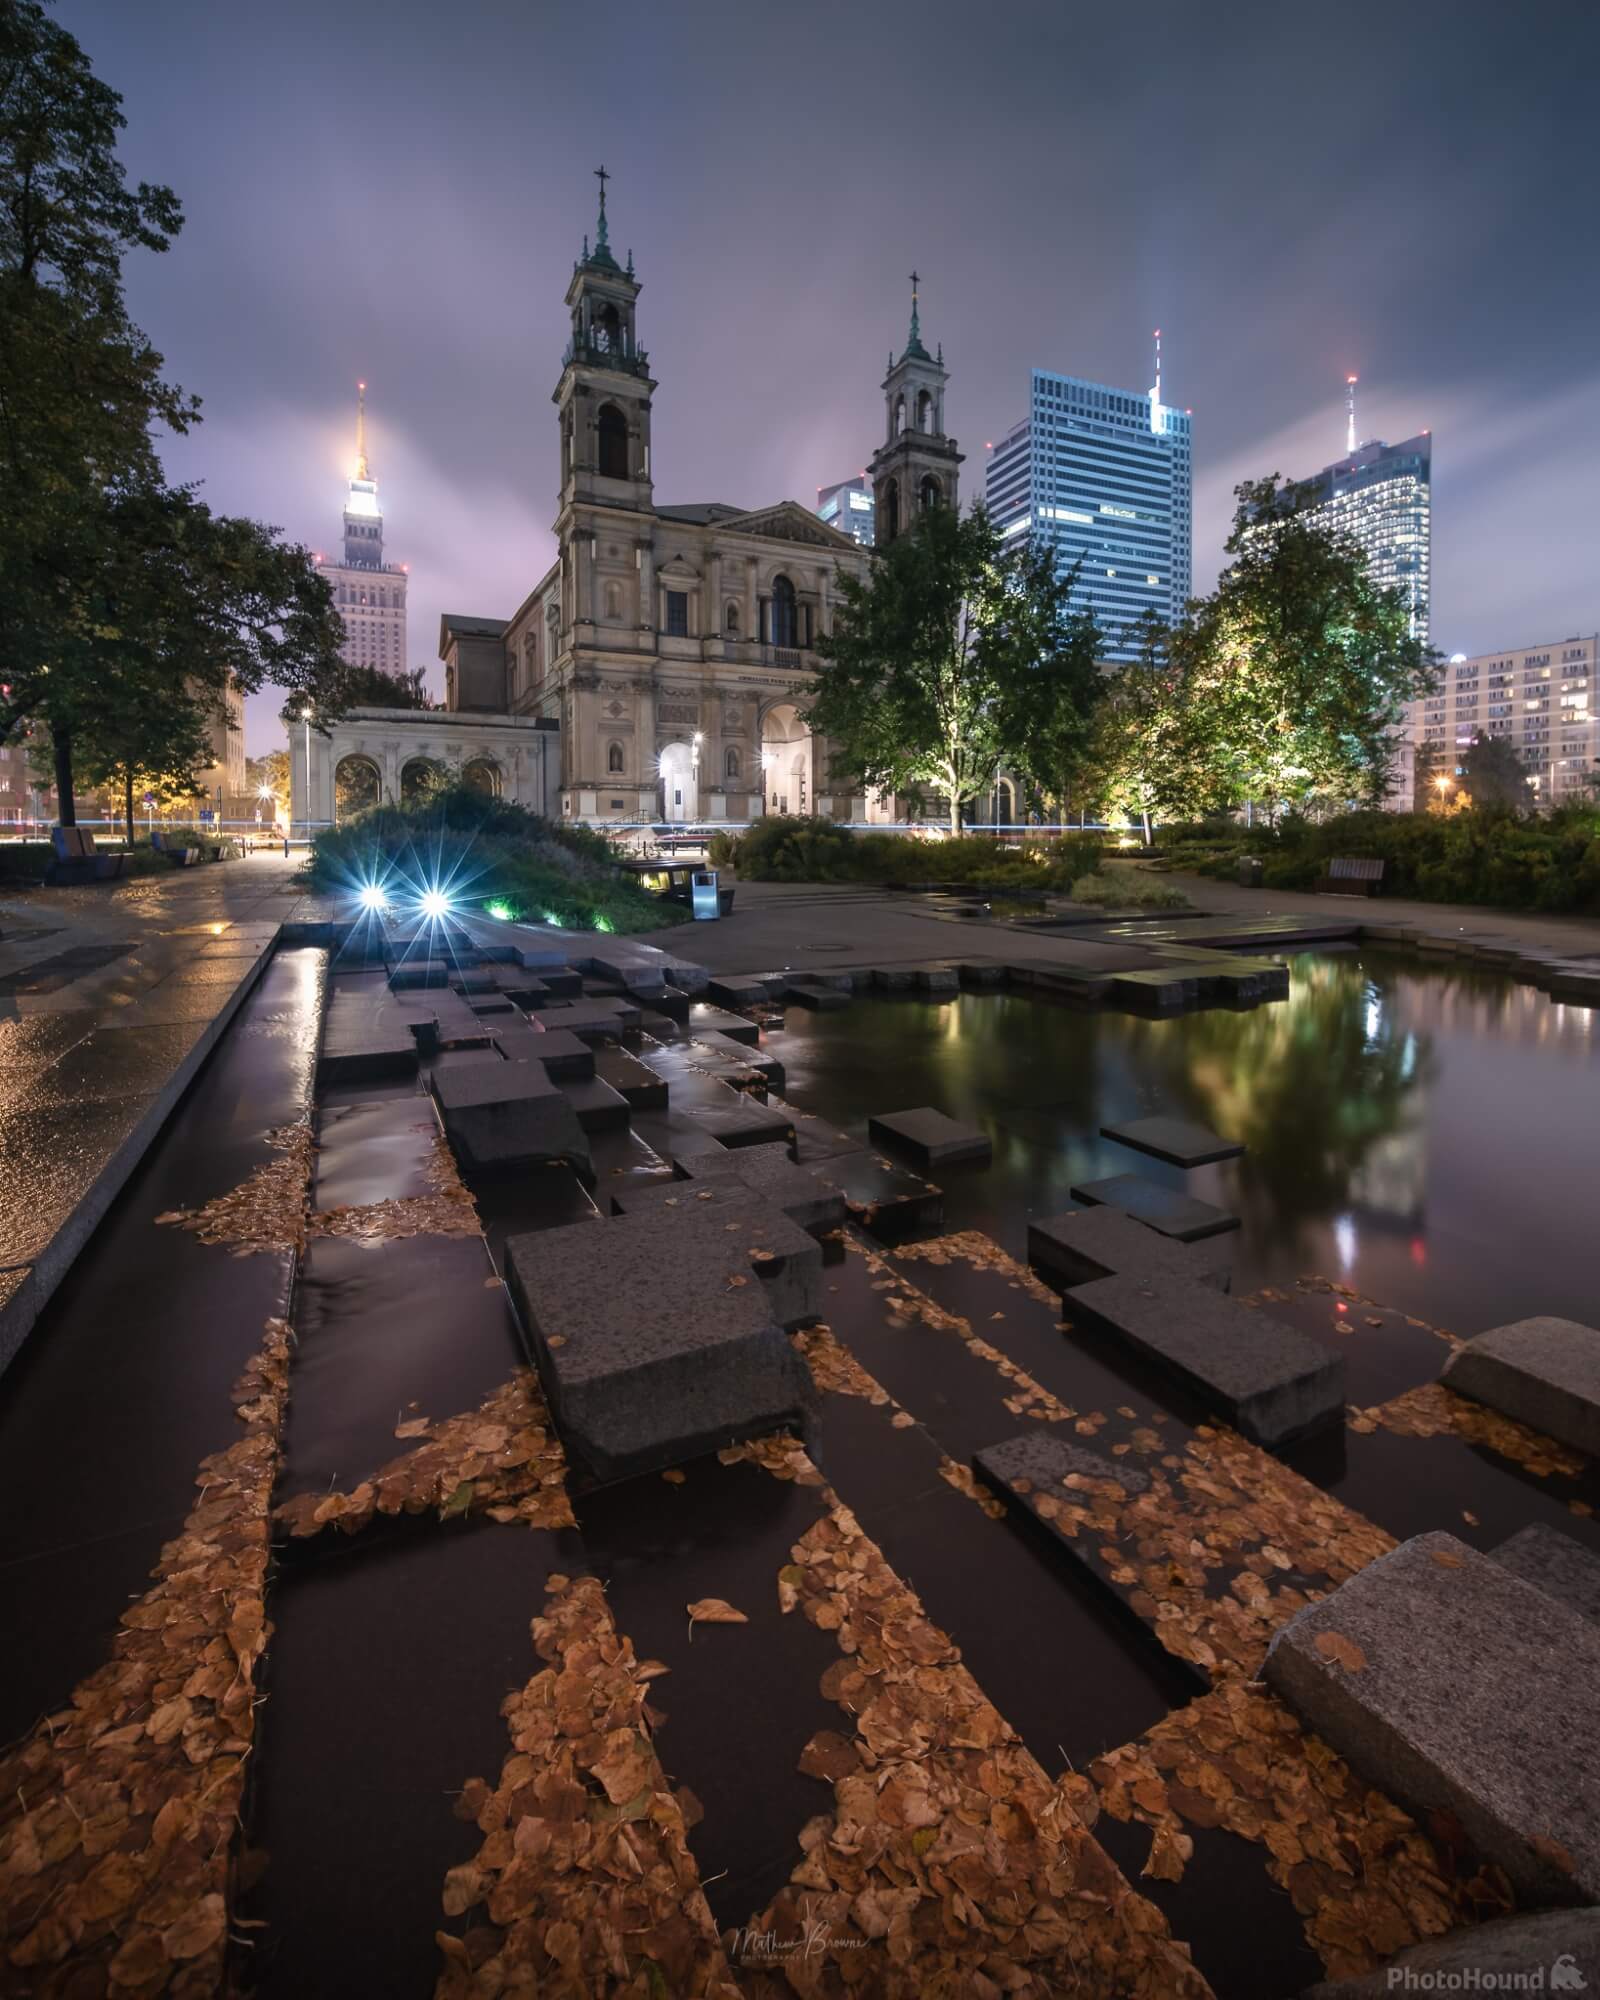 Image of Grzybowski Square by Mathew Browne